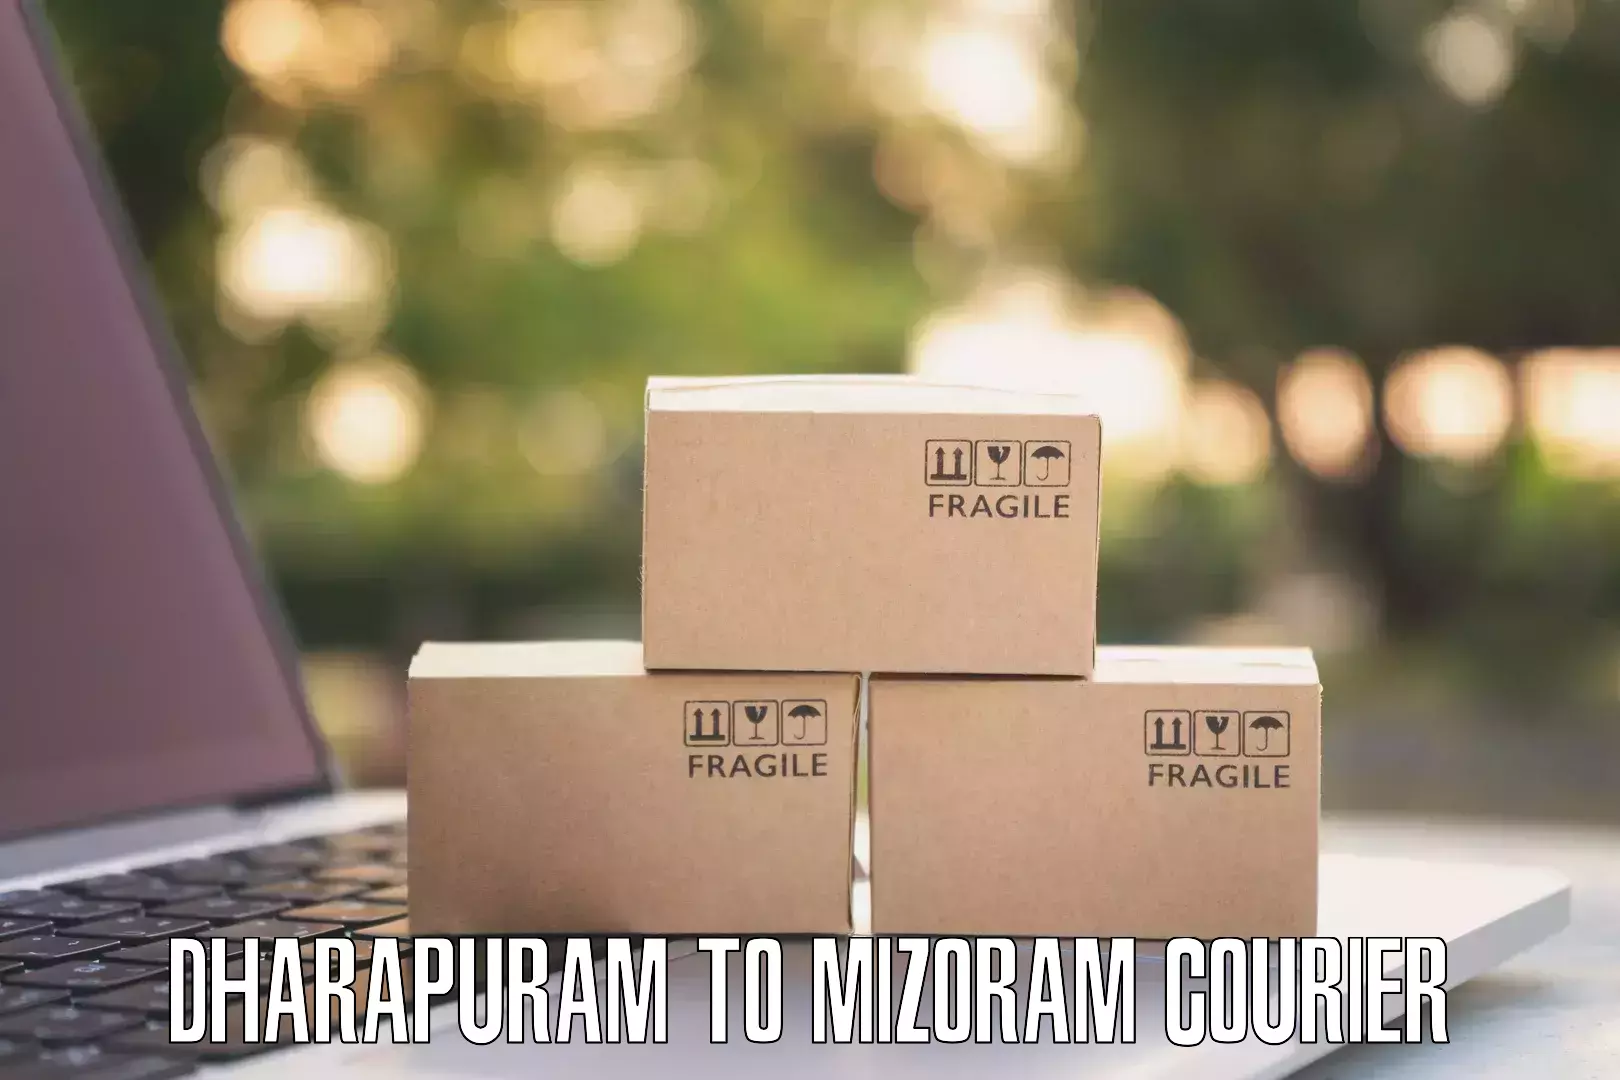 Supply chain efficiency Dharapuram to Siaha